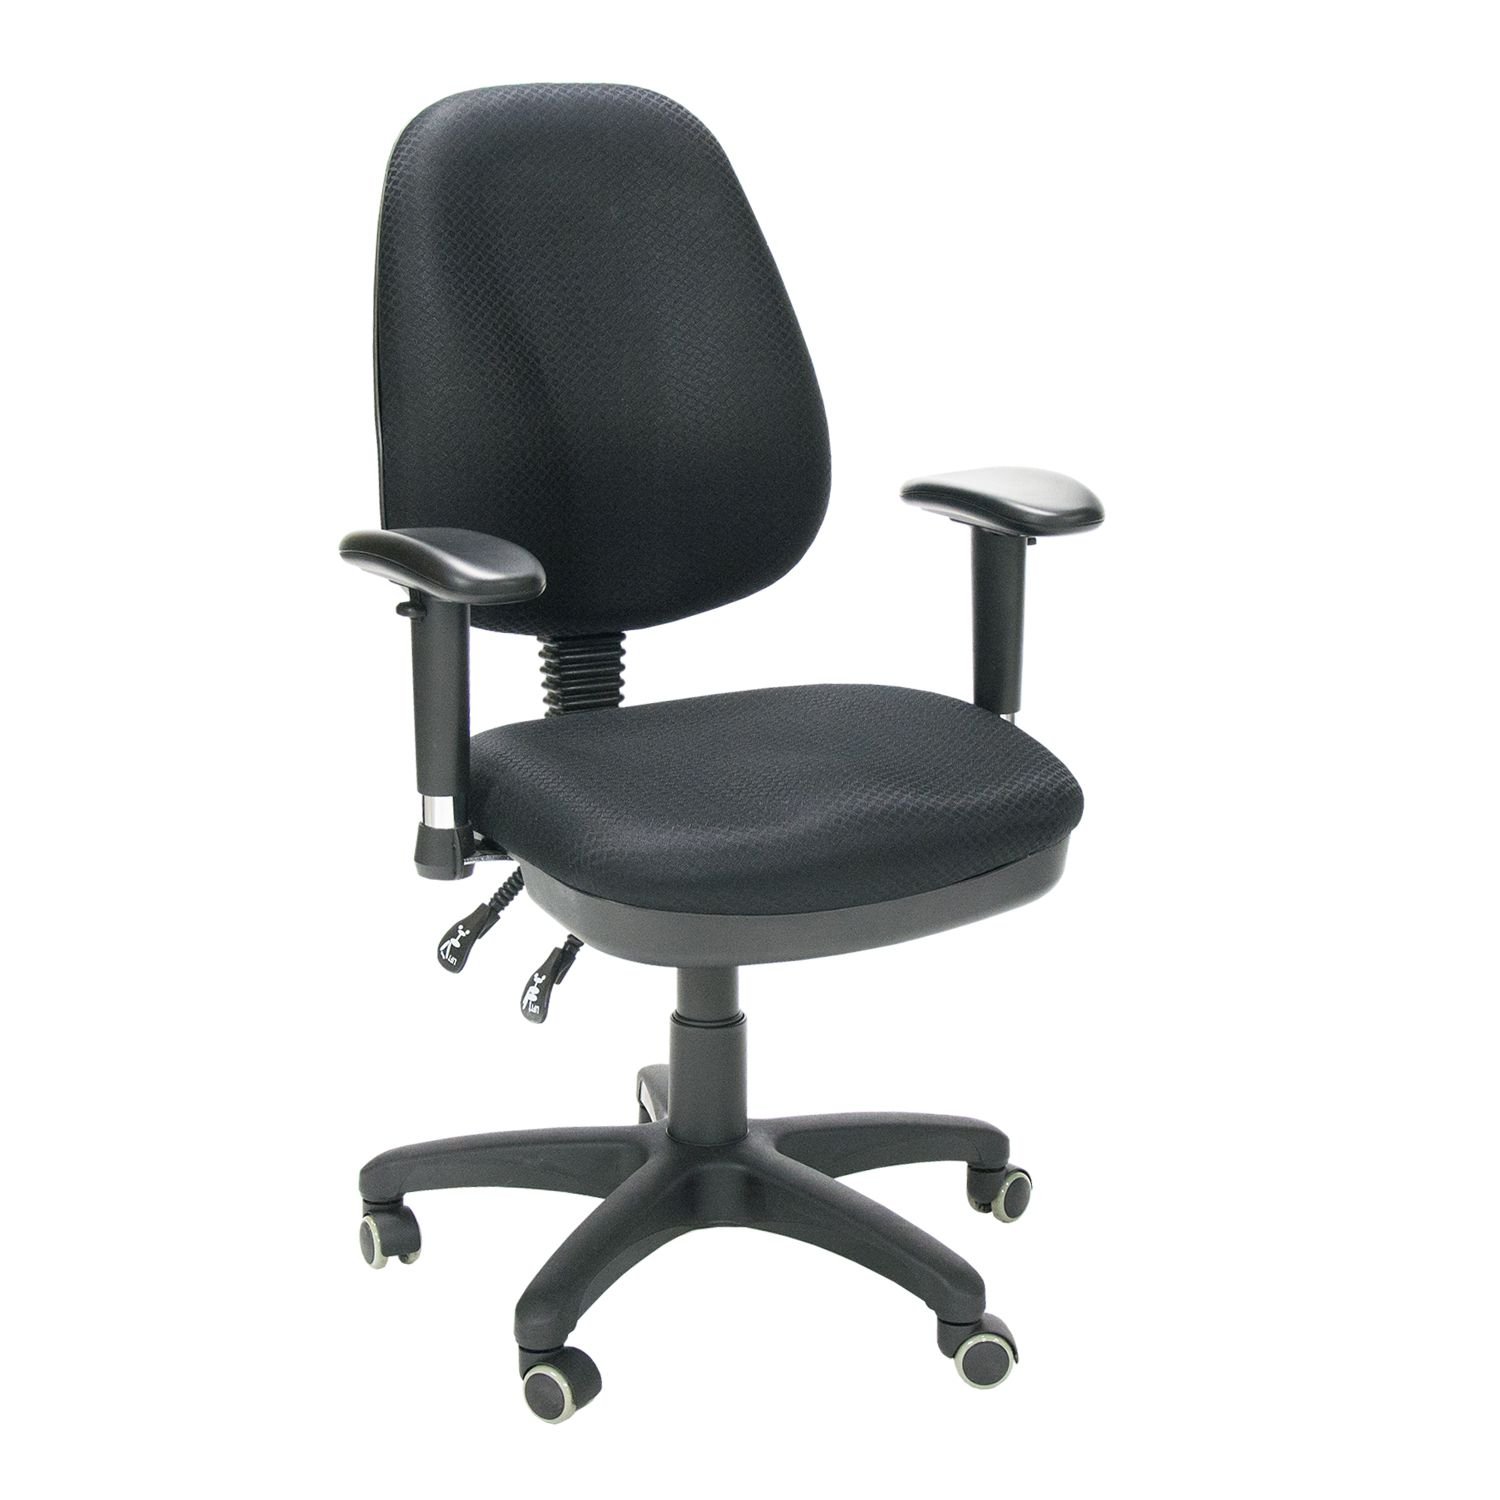 Biuro kėdė 421FGA-LUX, 65x47x96-106 cm, juoda